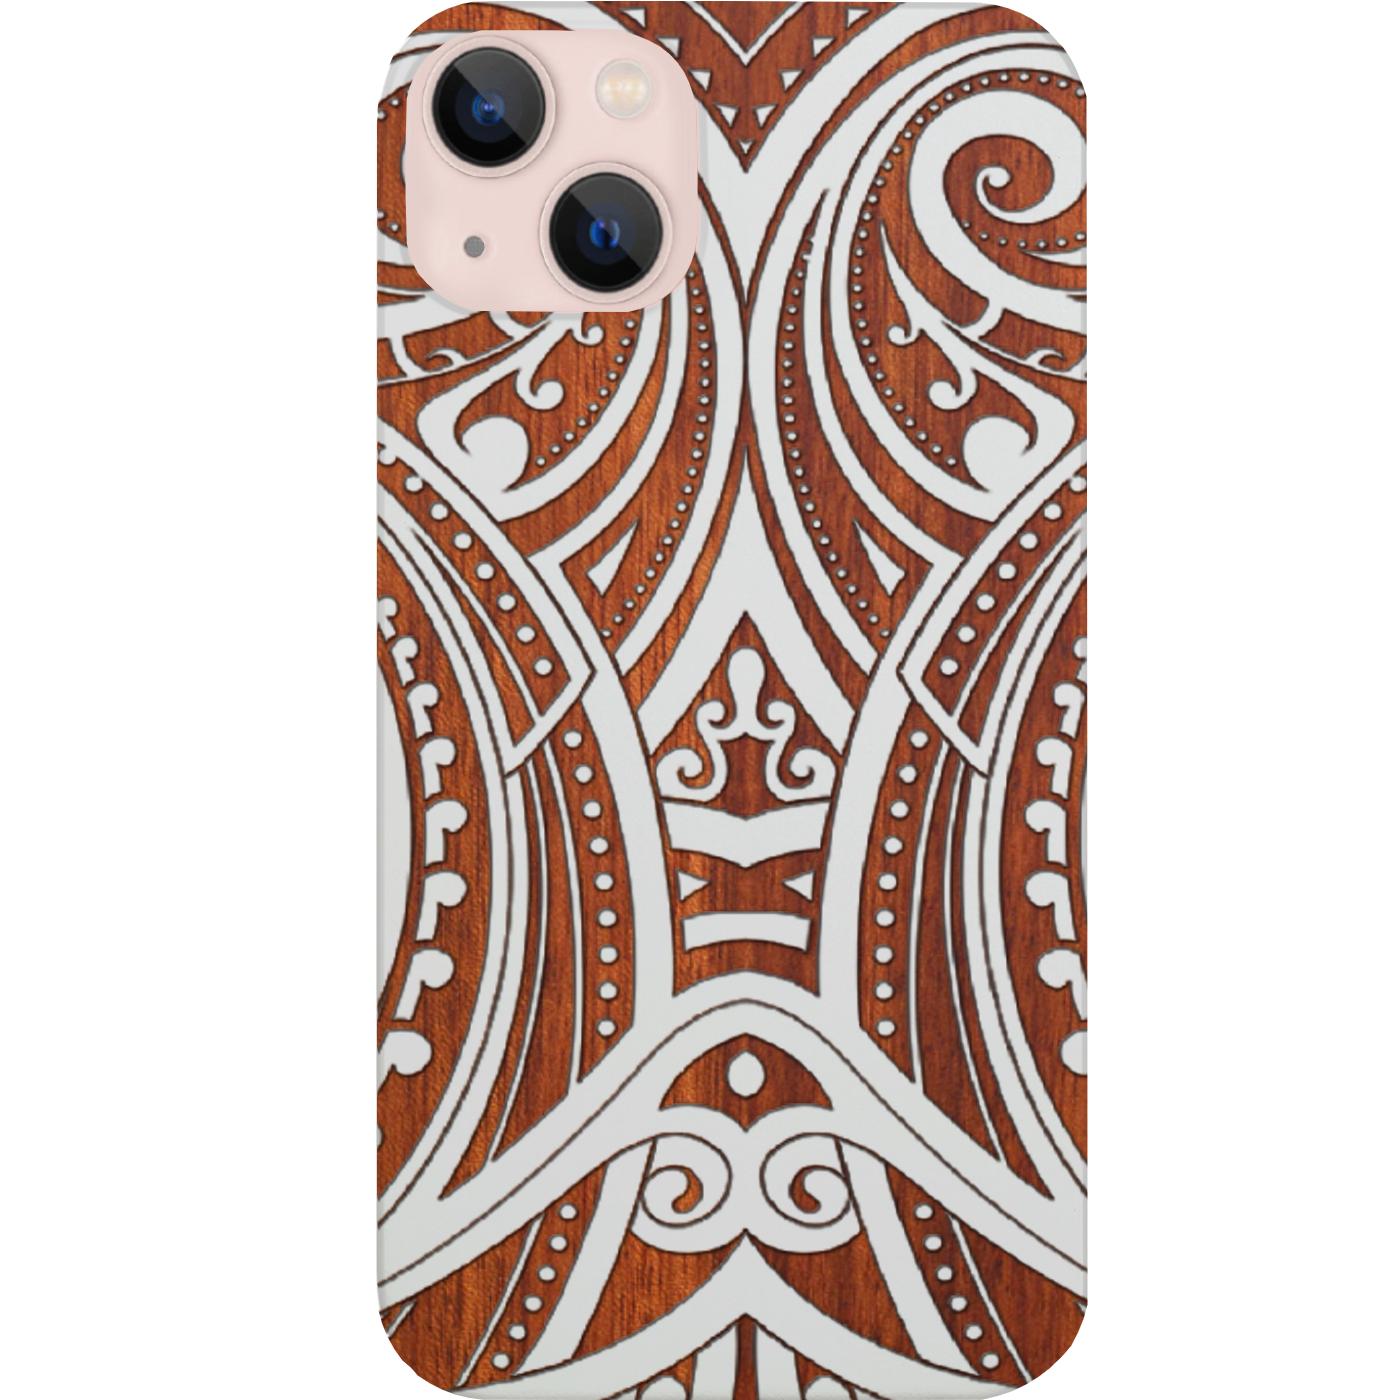 Maori 3 - Engraved Phone Case